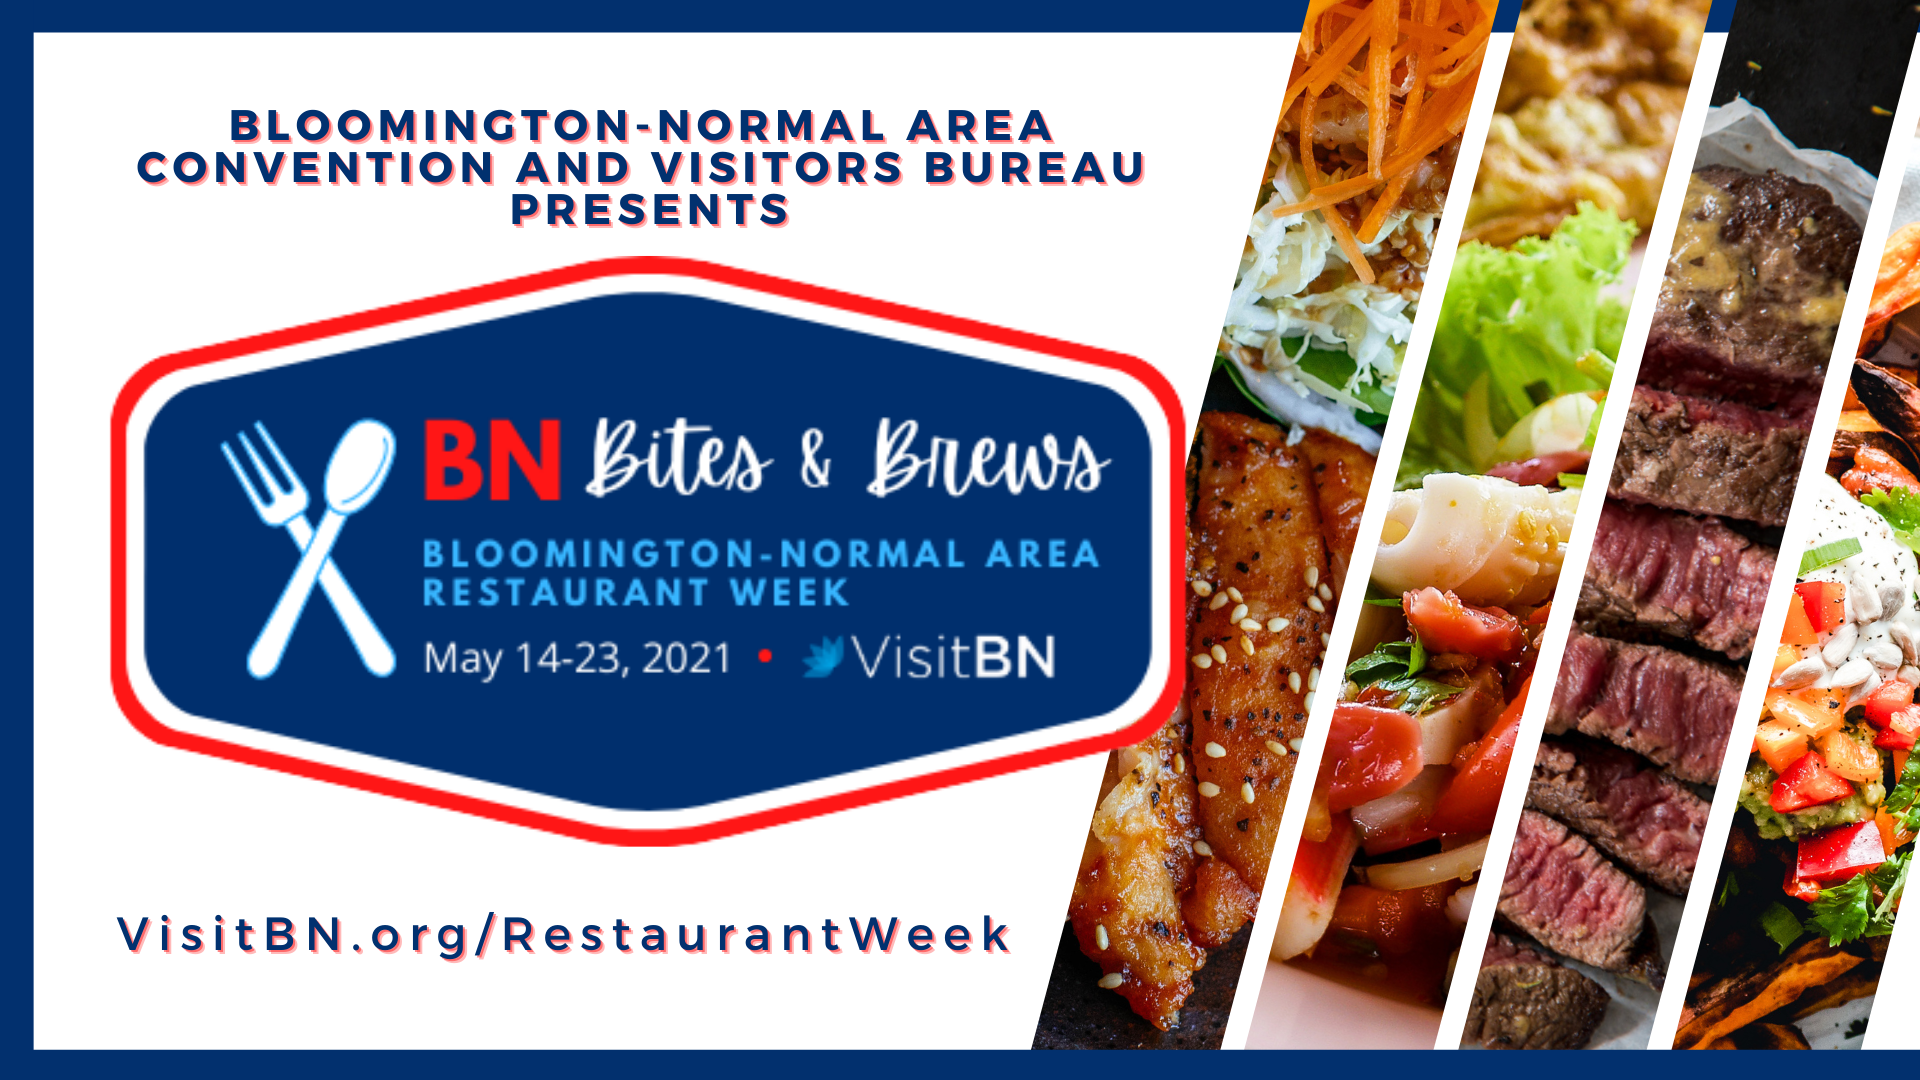 BN Bites & Brews - Bloomington-Normal Area Restaurant Week